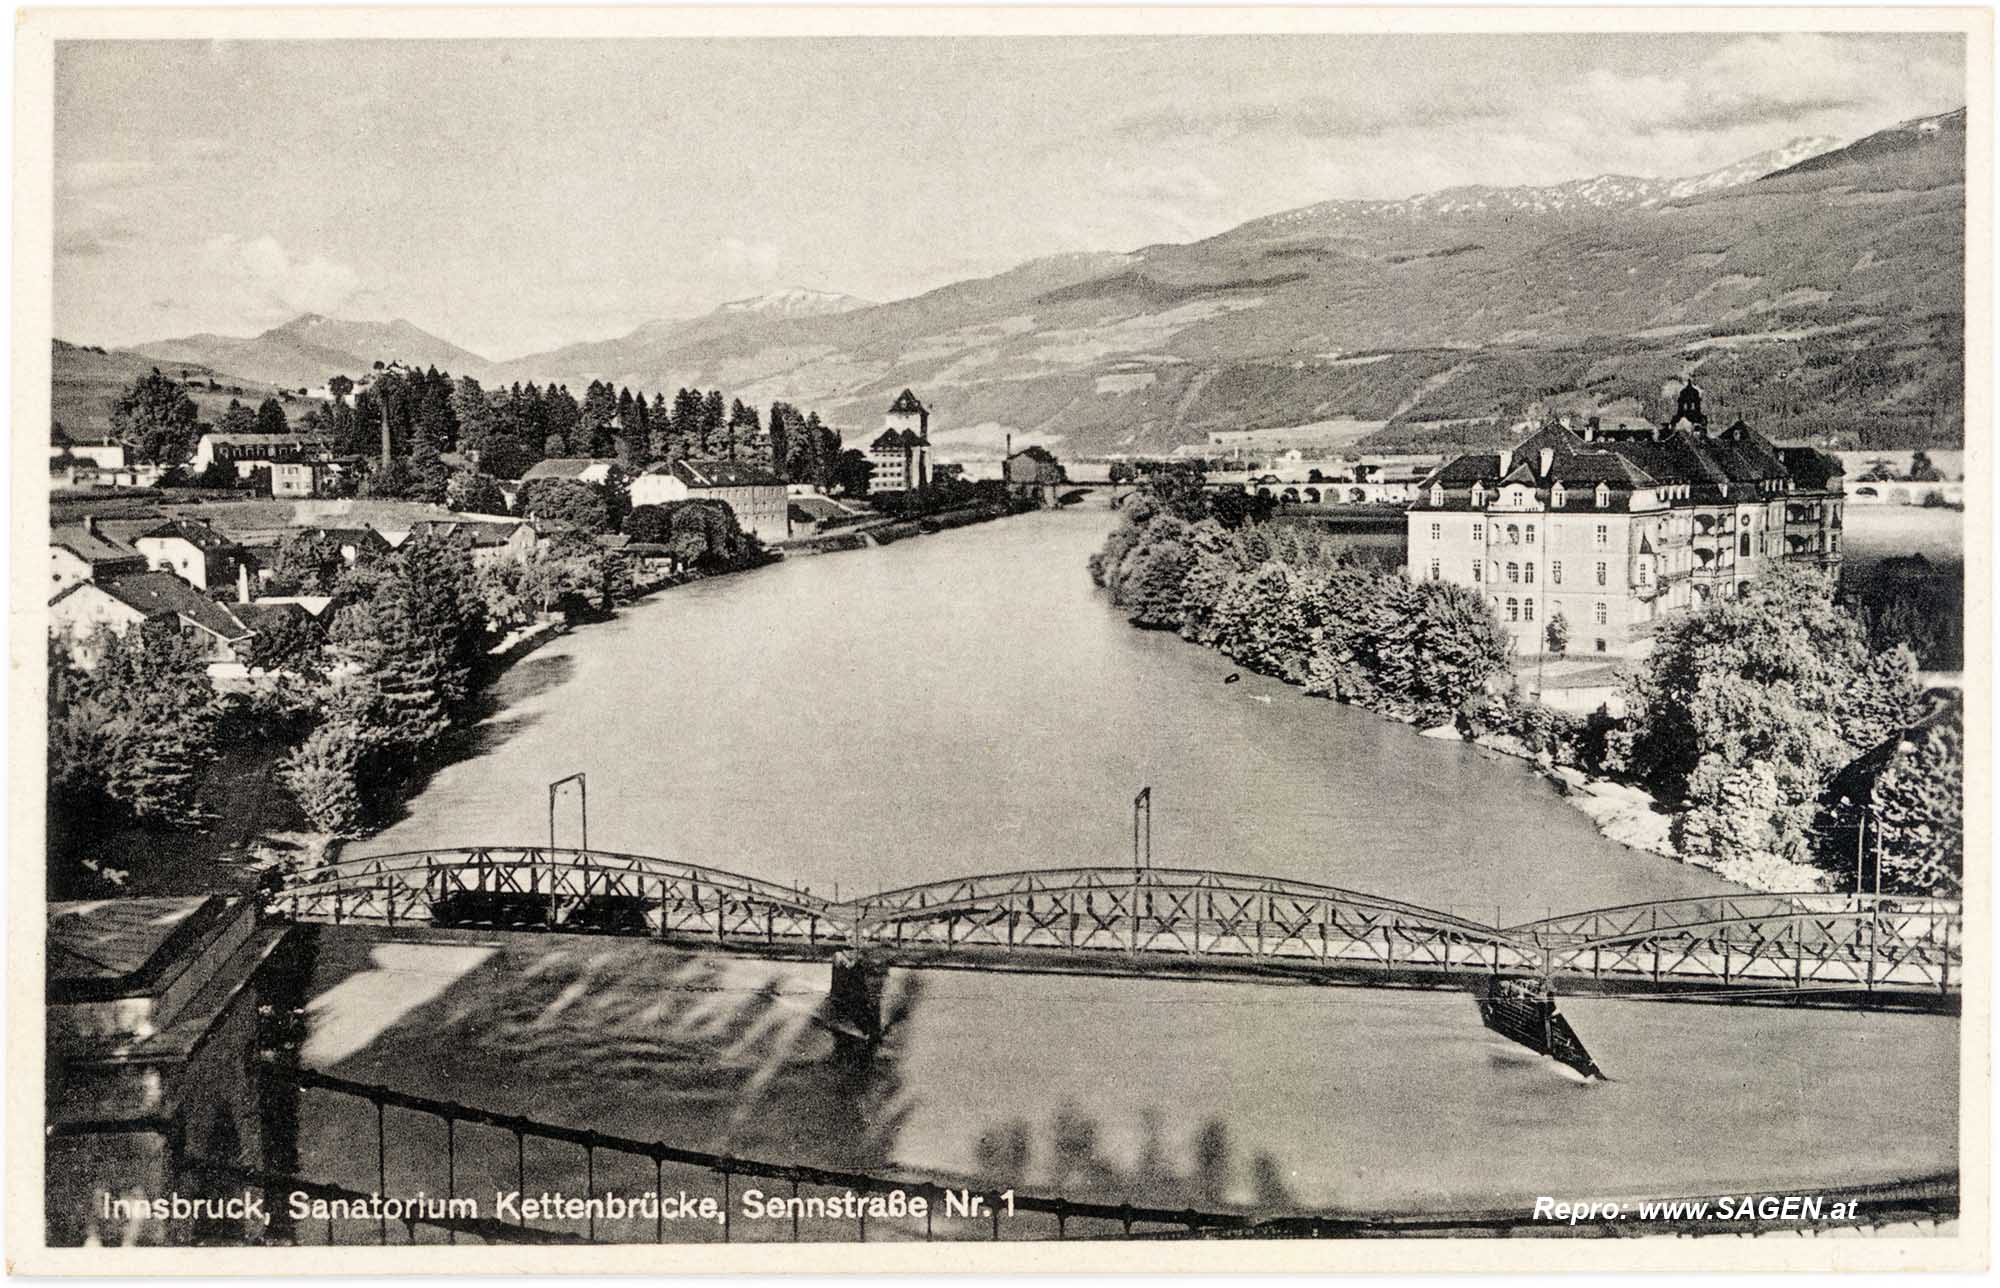 Innsbruck, Sanatorium Kettenbrücke